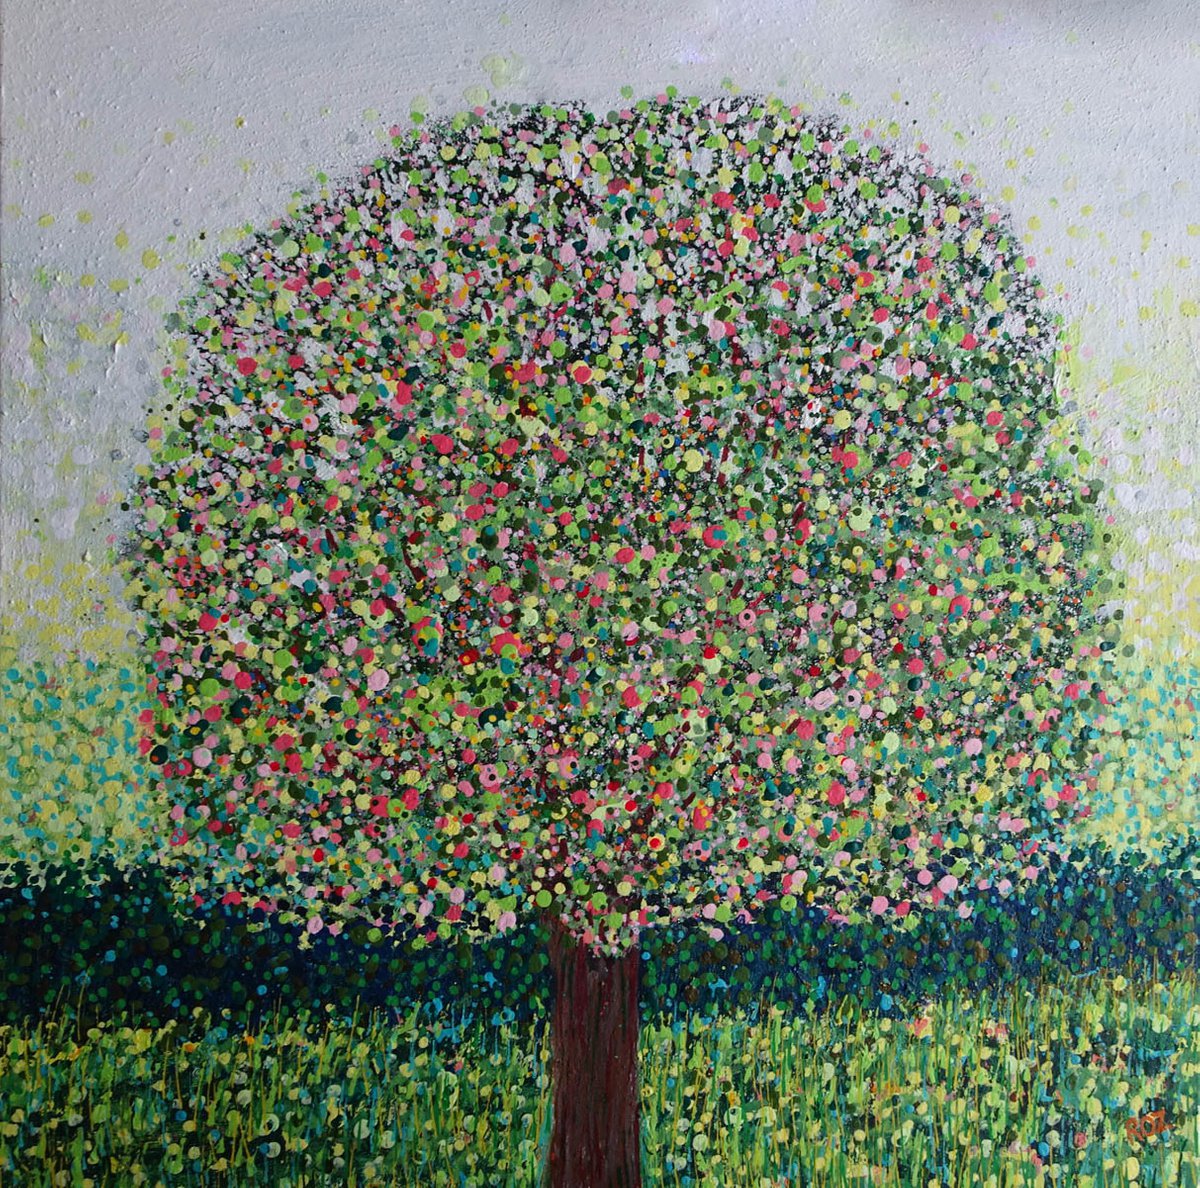 Patterned Tree 2 by Roz Edwards